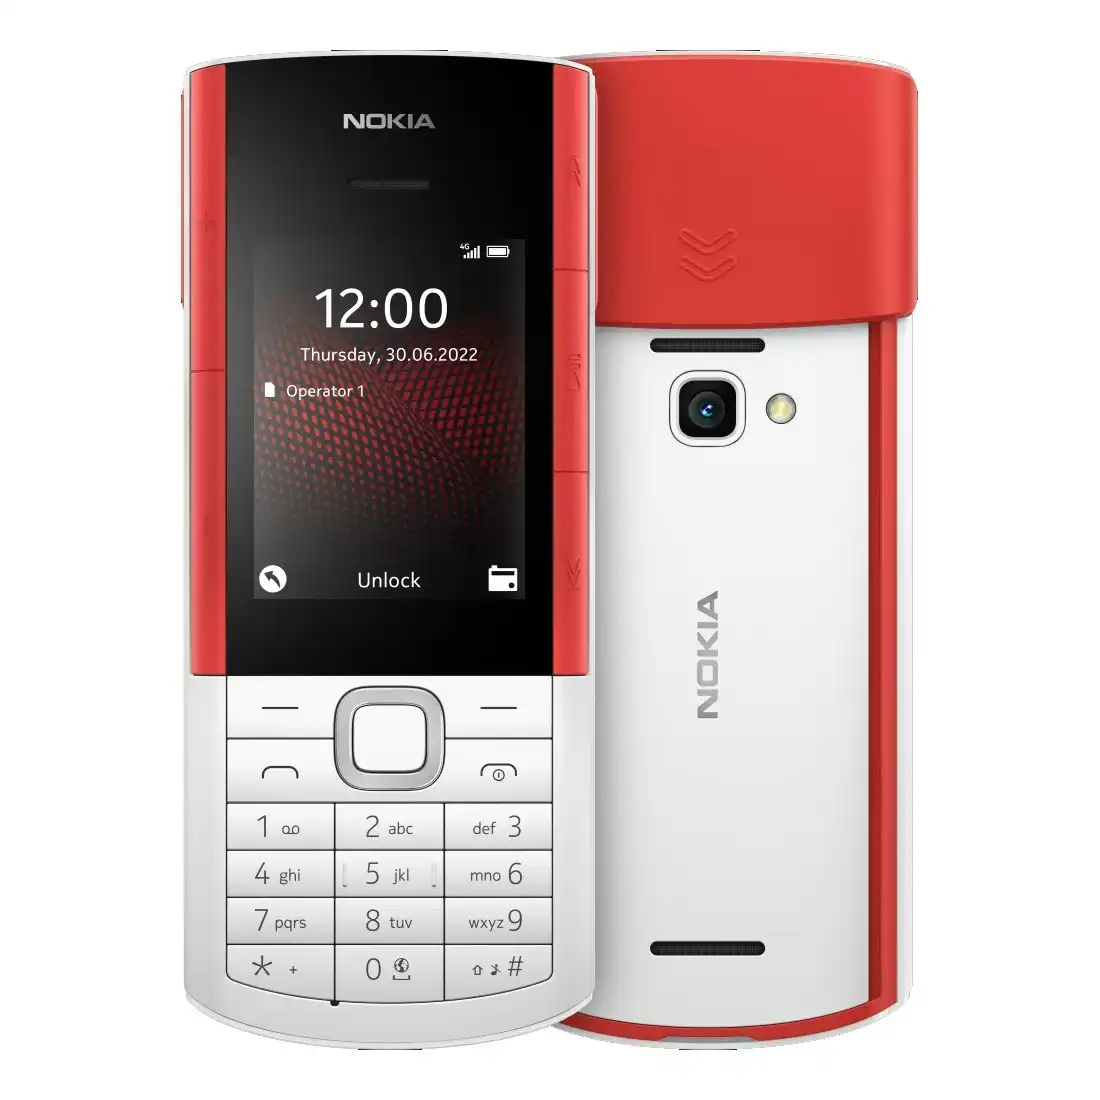 Nokia 5710 XpressAudio (Dual Sim, 2.4 inches, 128MB/48MB) Feature phone - White